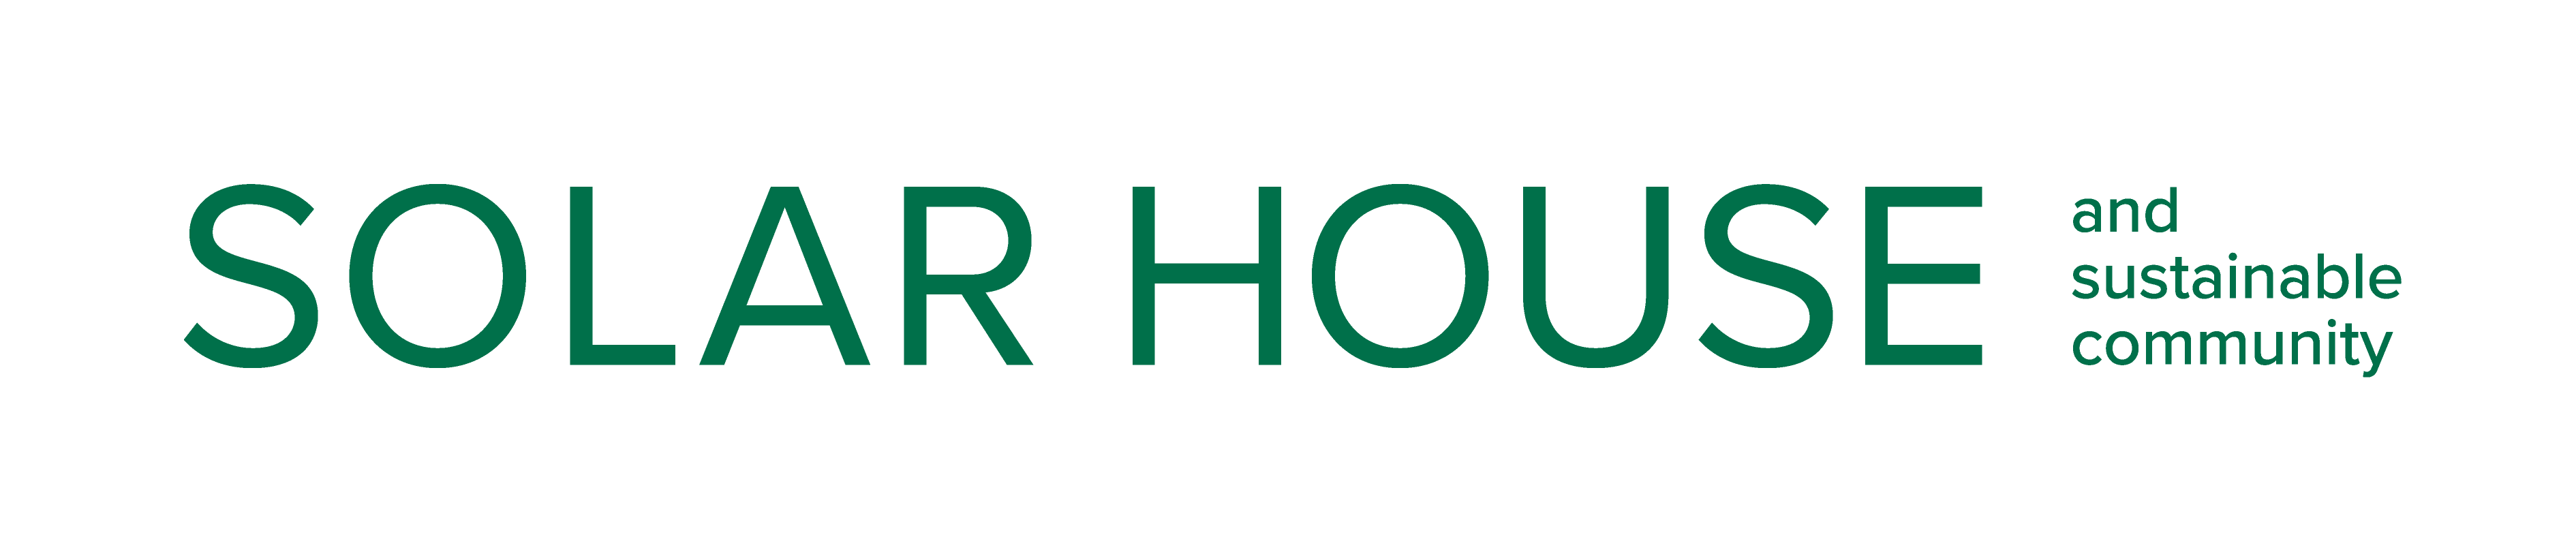 Solar House and Sustainable Community Logo